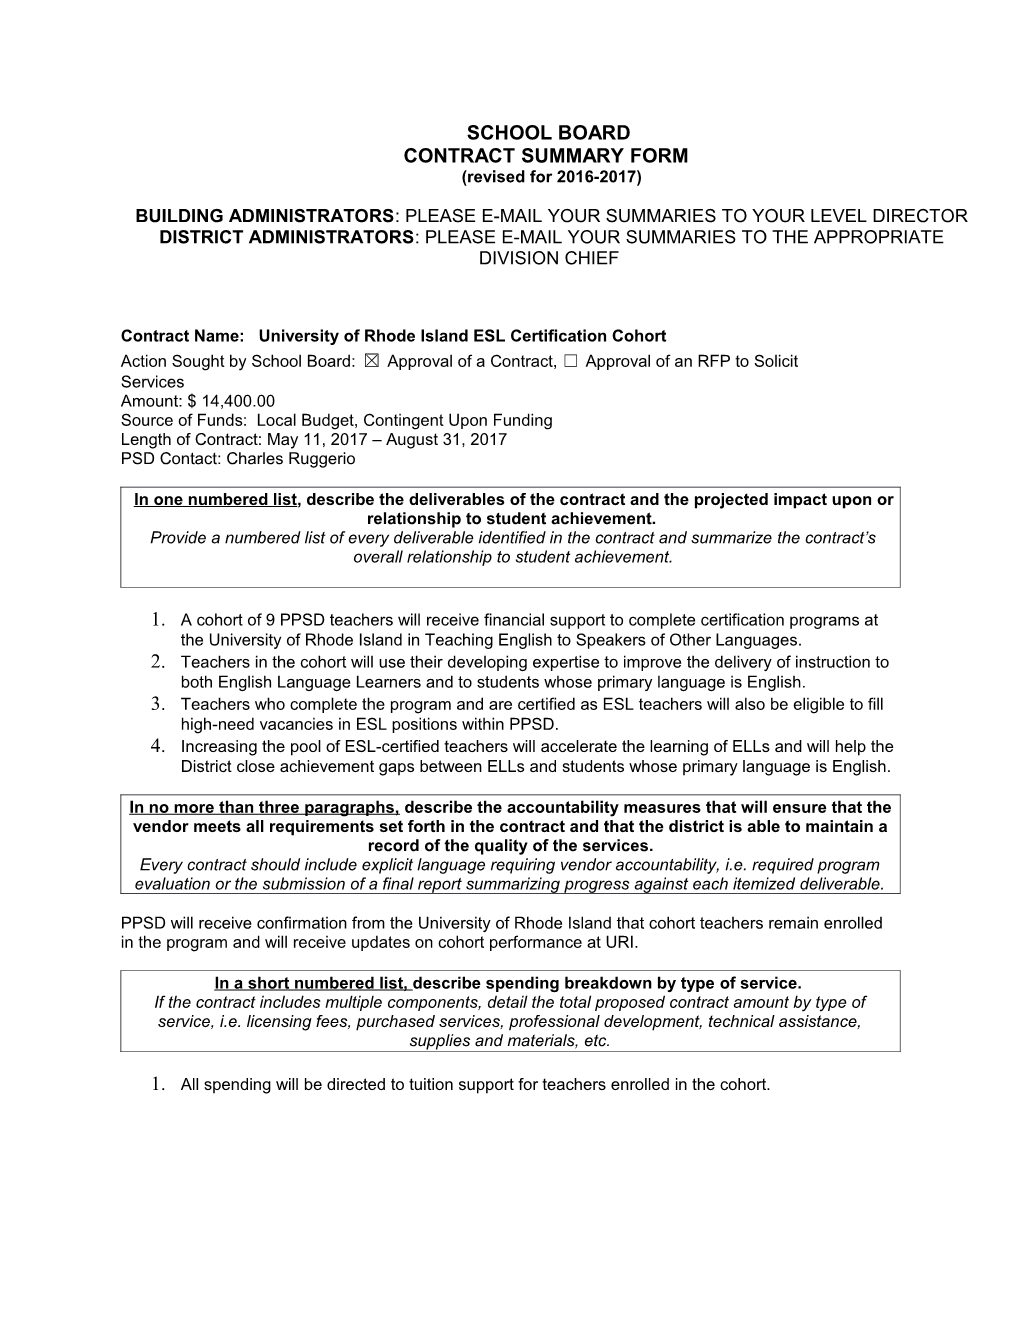 Contract Name: University of Rhode Island ESL Certification Cohort